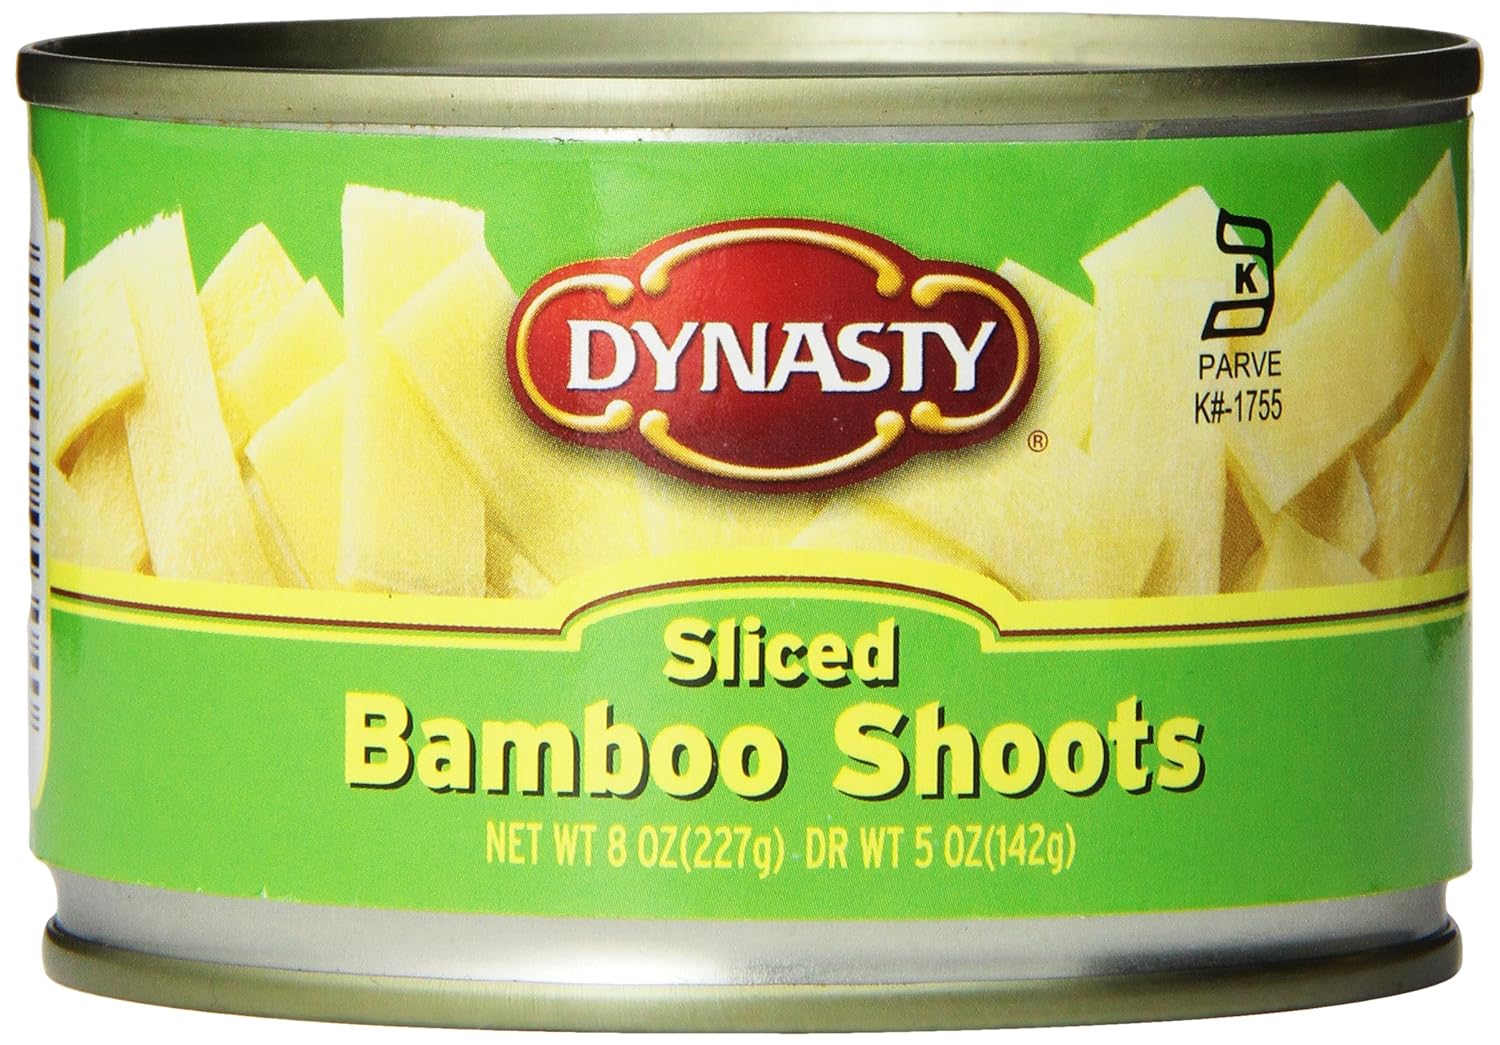 DYNASTY BAMBOO SHOOTS SLICE 12/ 8 OZ